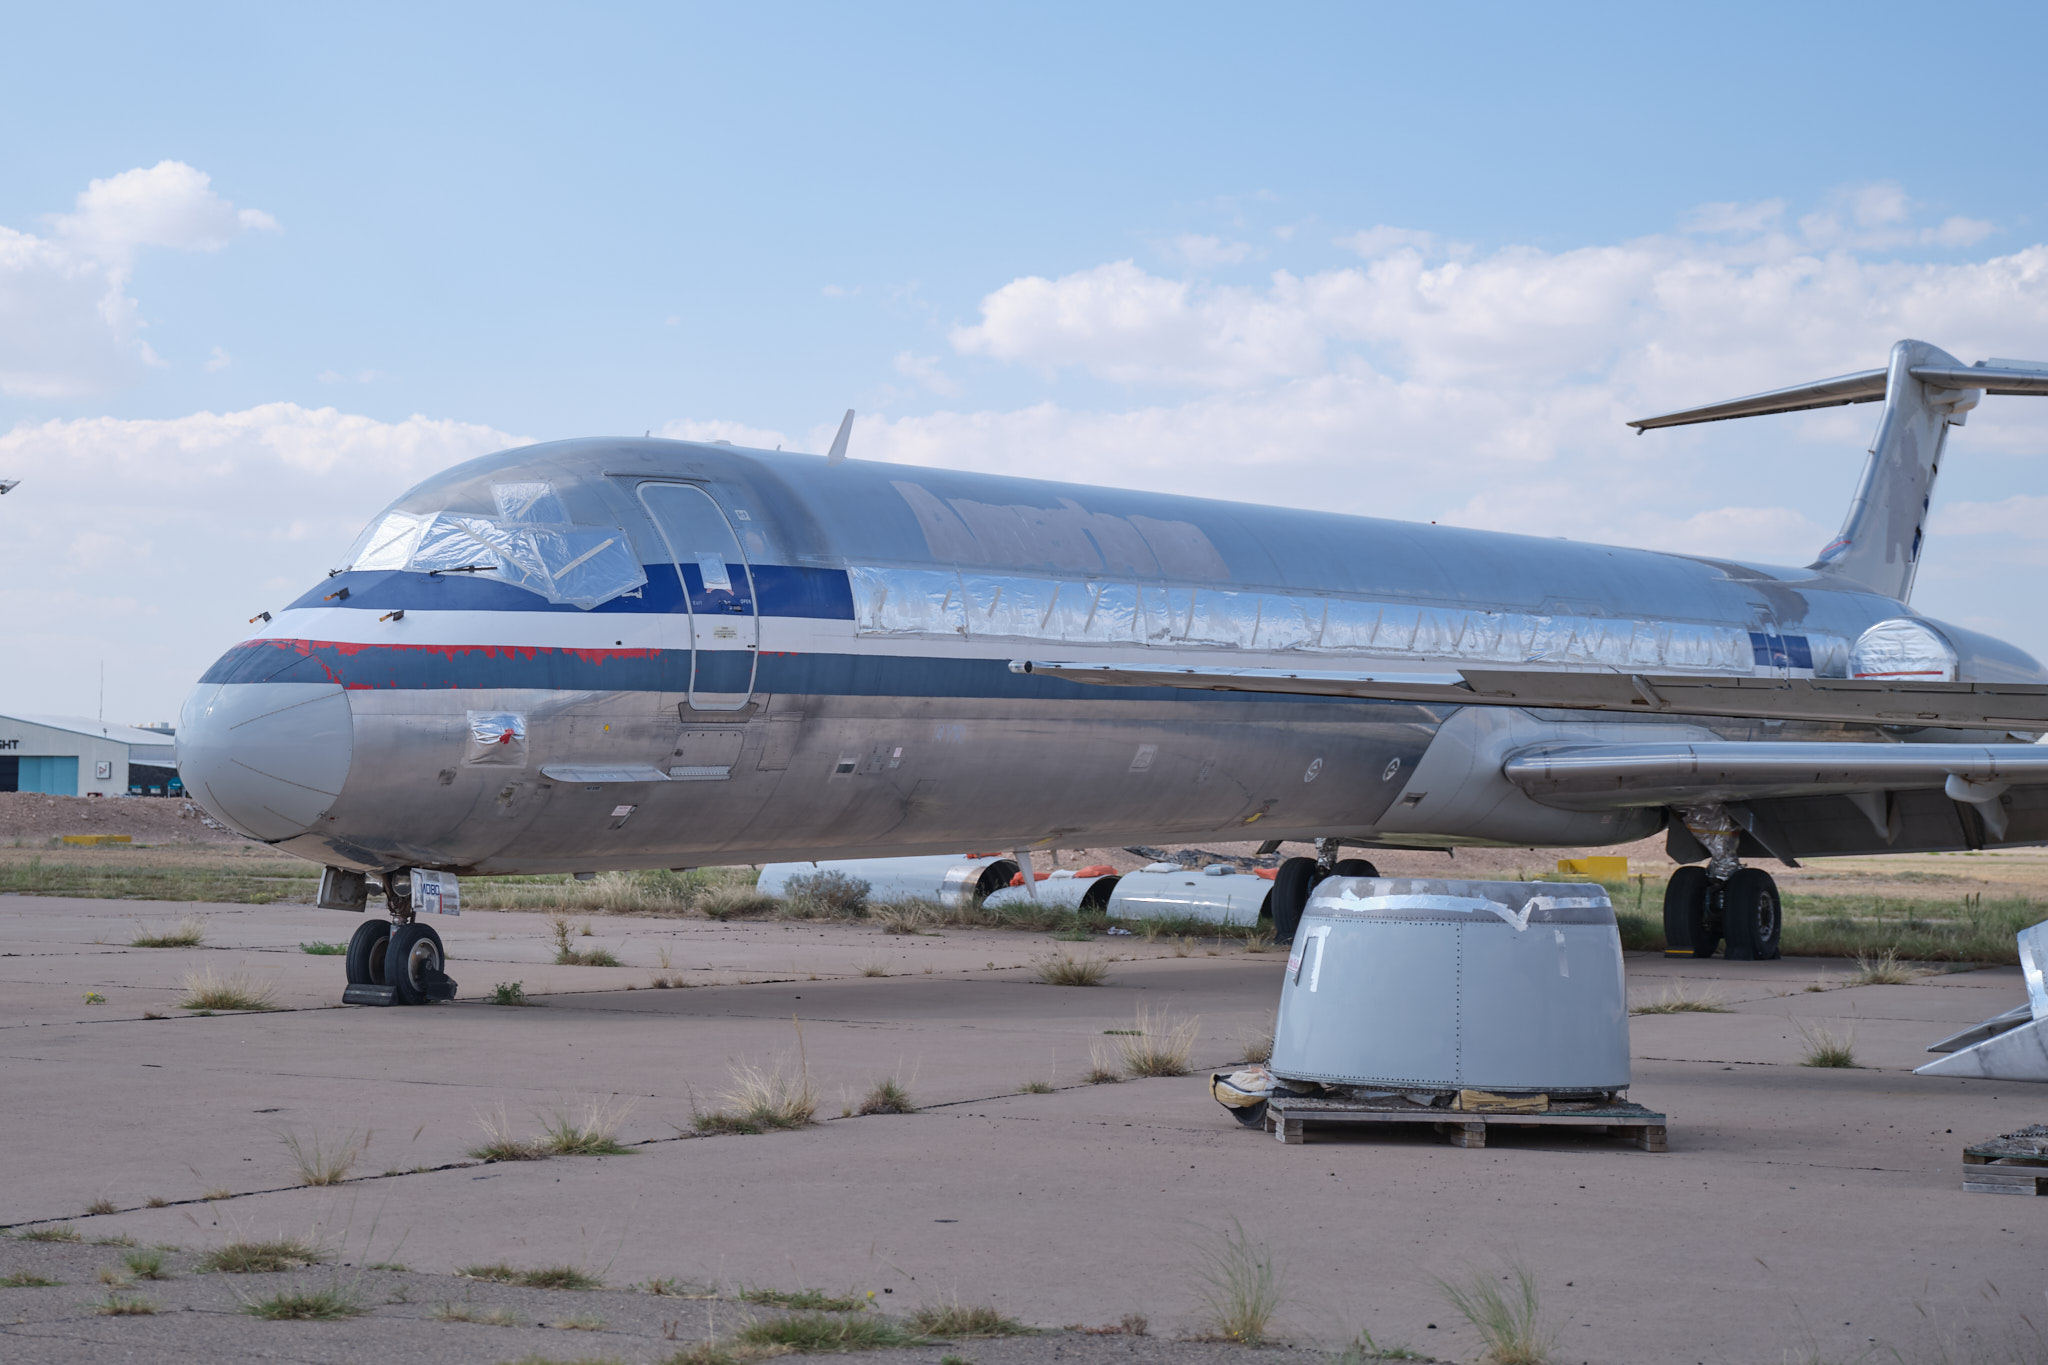 a silver airplane on a tarmac